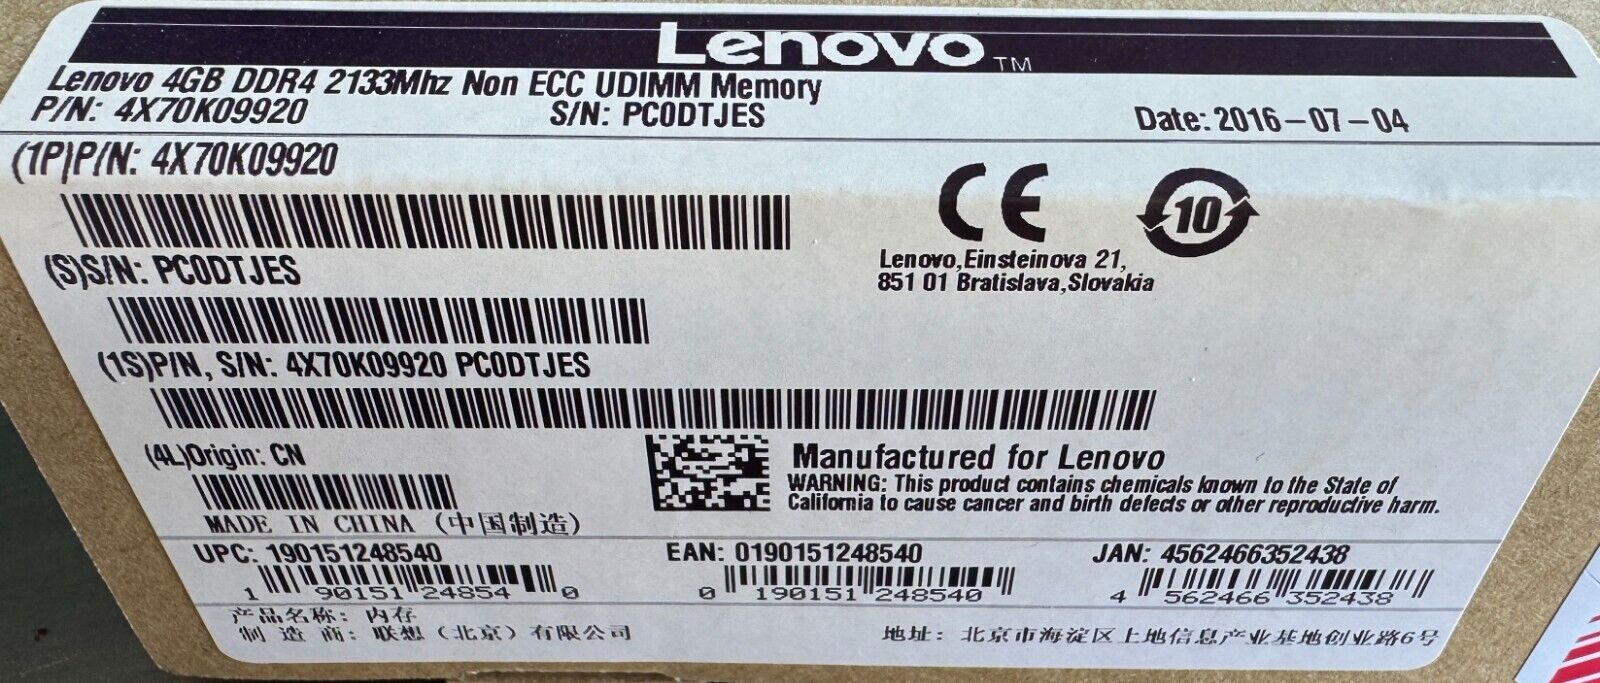 Lenovo 4GB DDR4 2133Mhz RAM Memory 4X70K09920